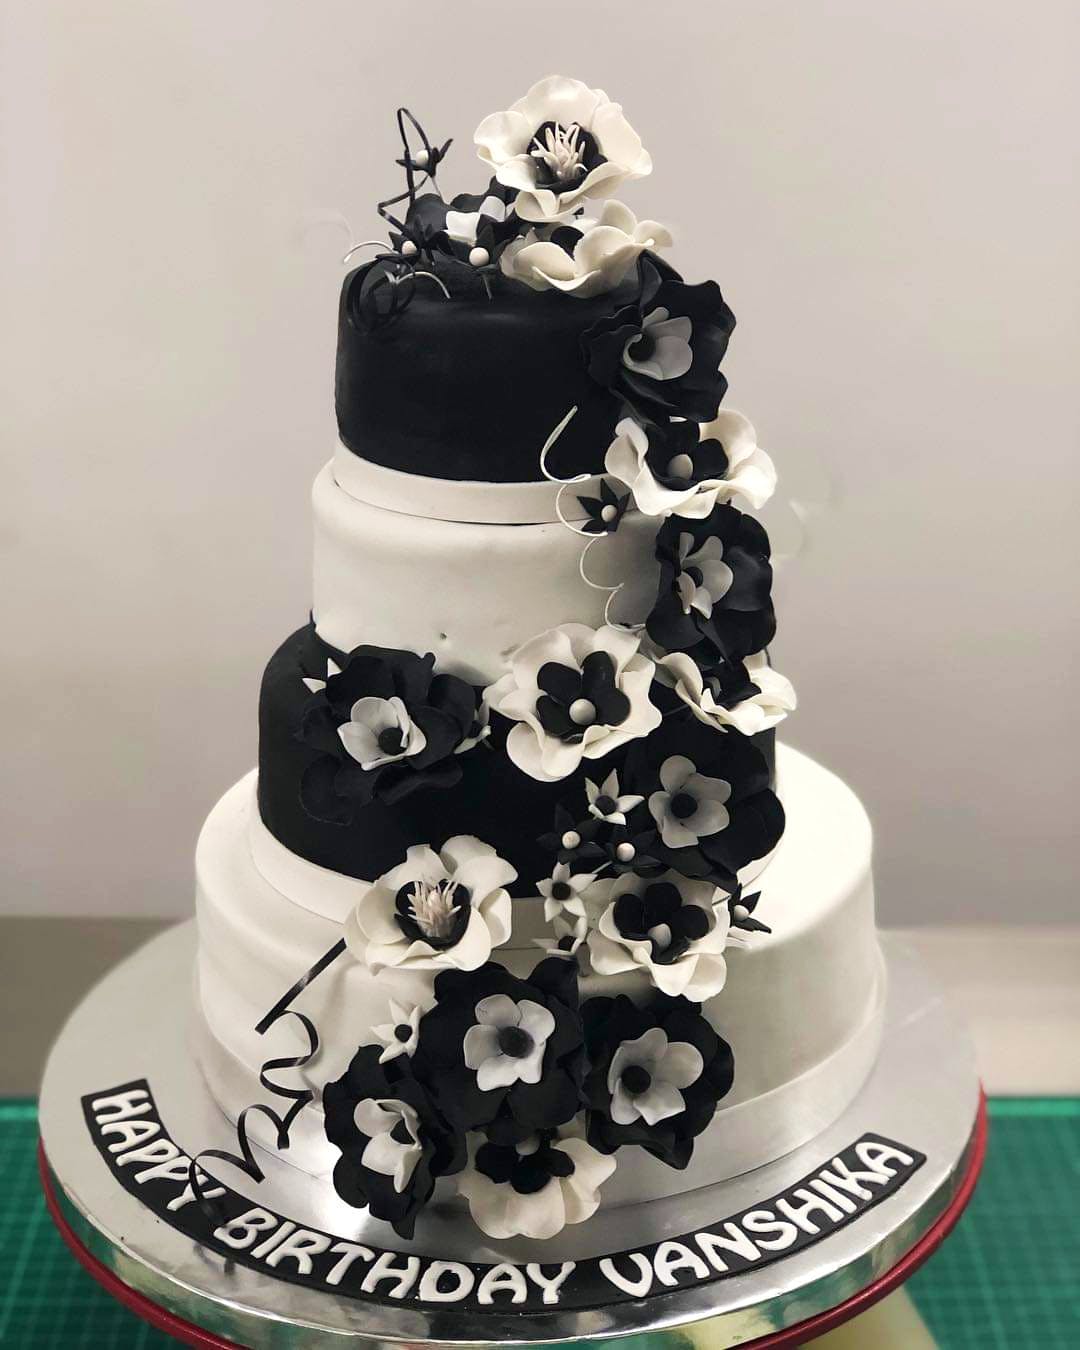 Cake,Cake decorating,Sugar paste,White,Black,Fondant,Wedding cake,Sugar cake,Dessert,Pasteles